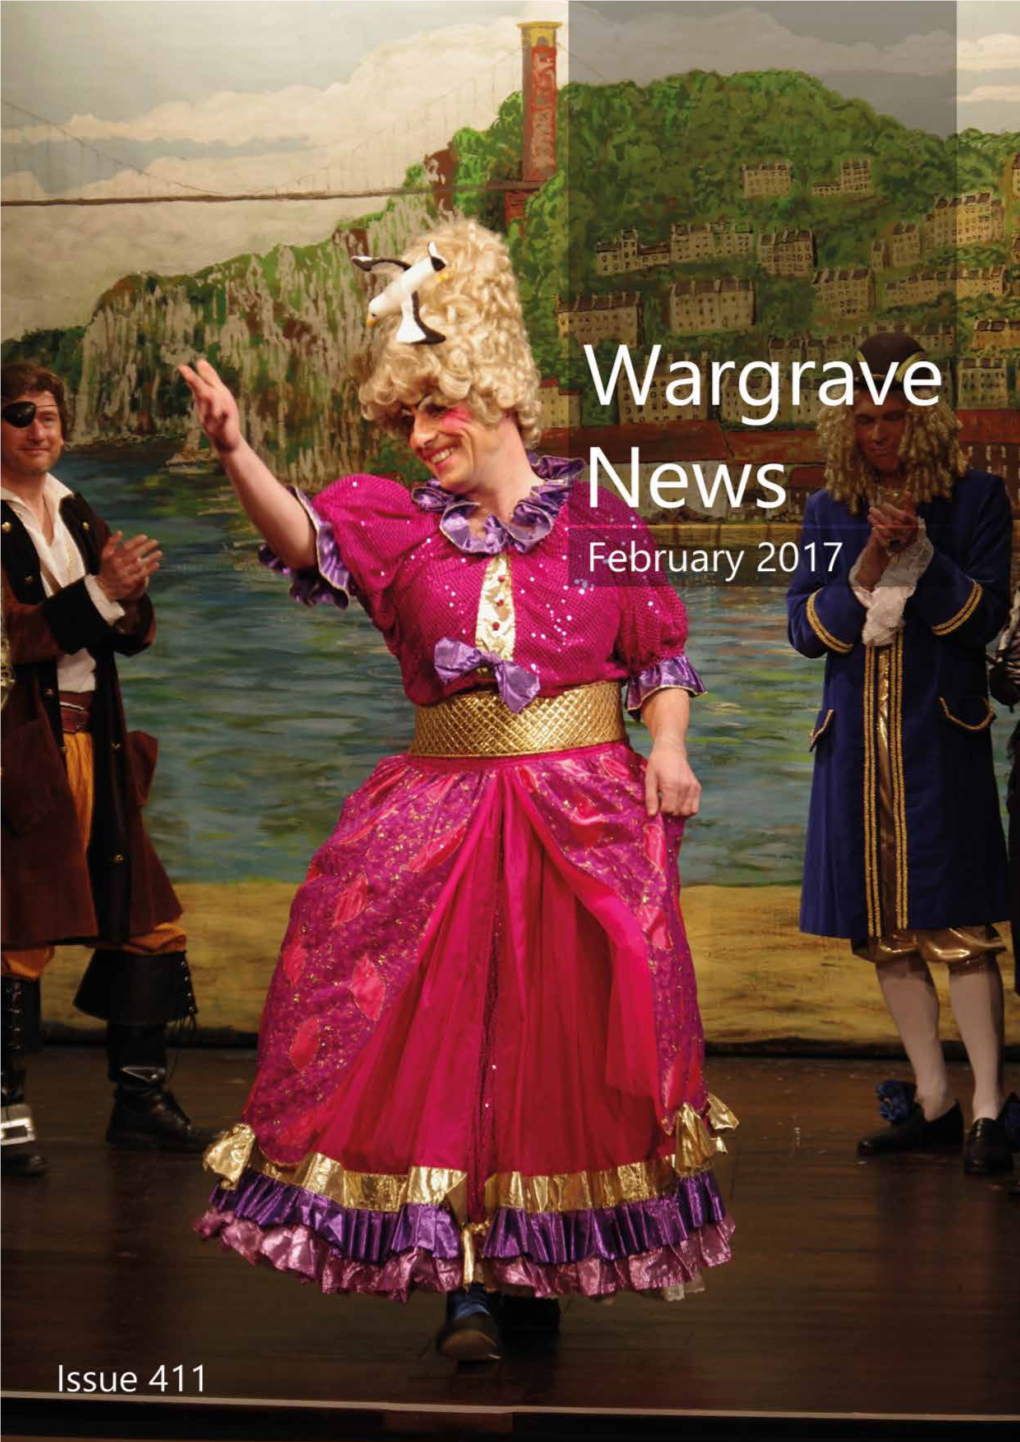 Wargrave Heritage Trust